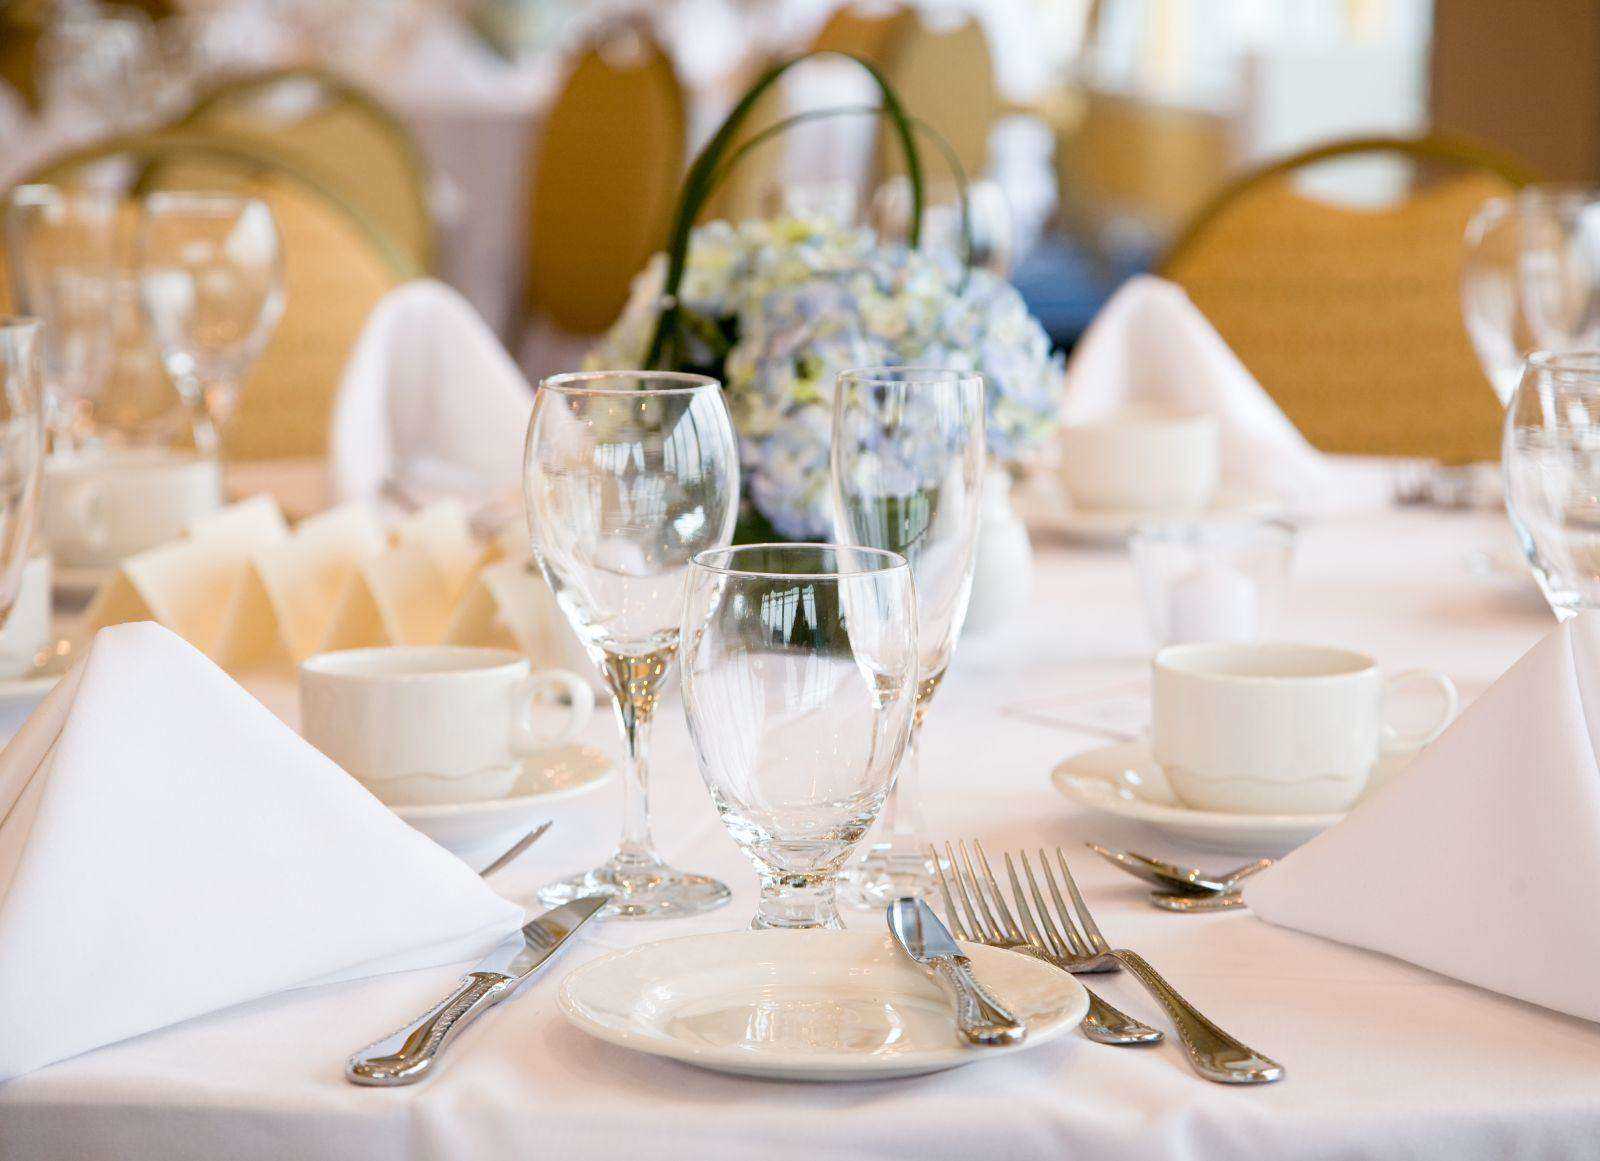 formal or wedding table setting idea